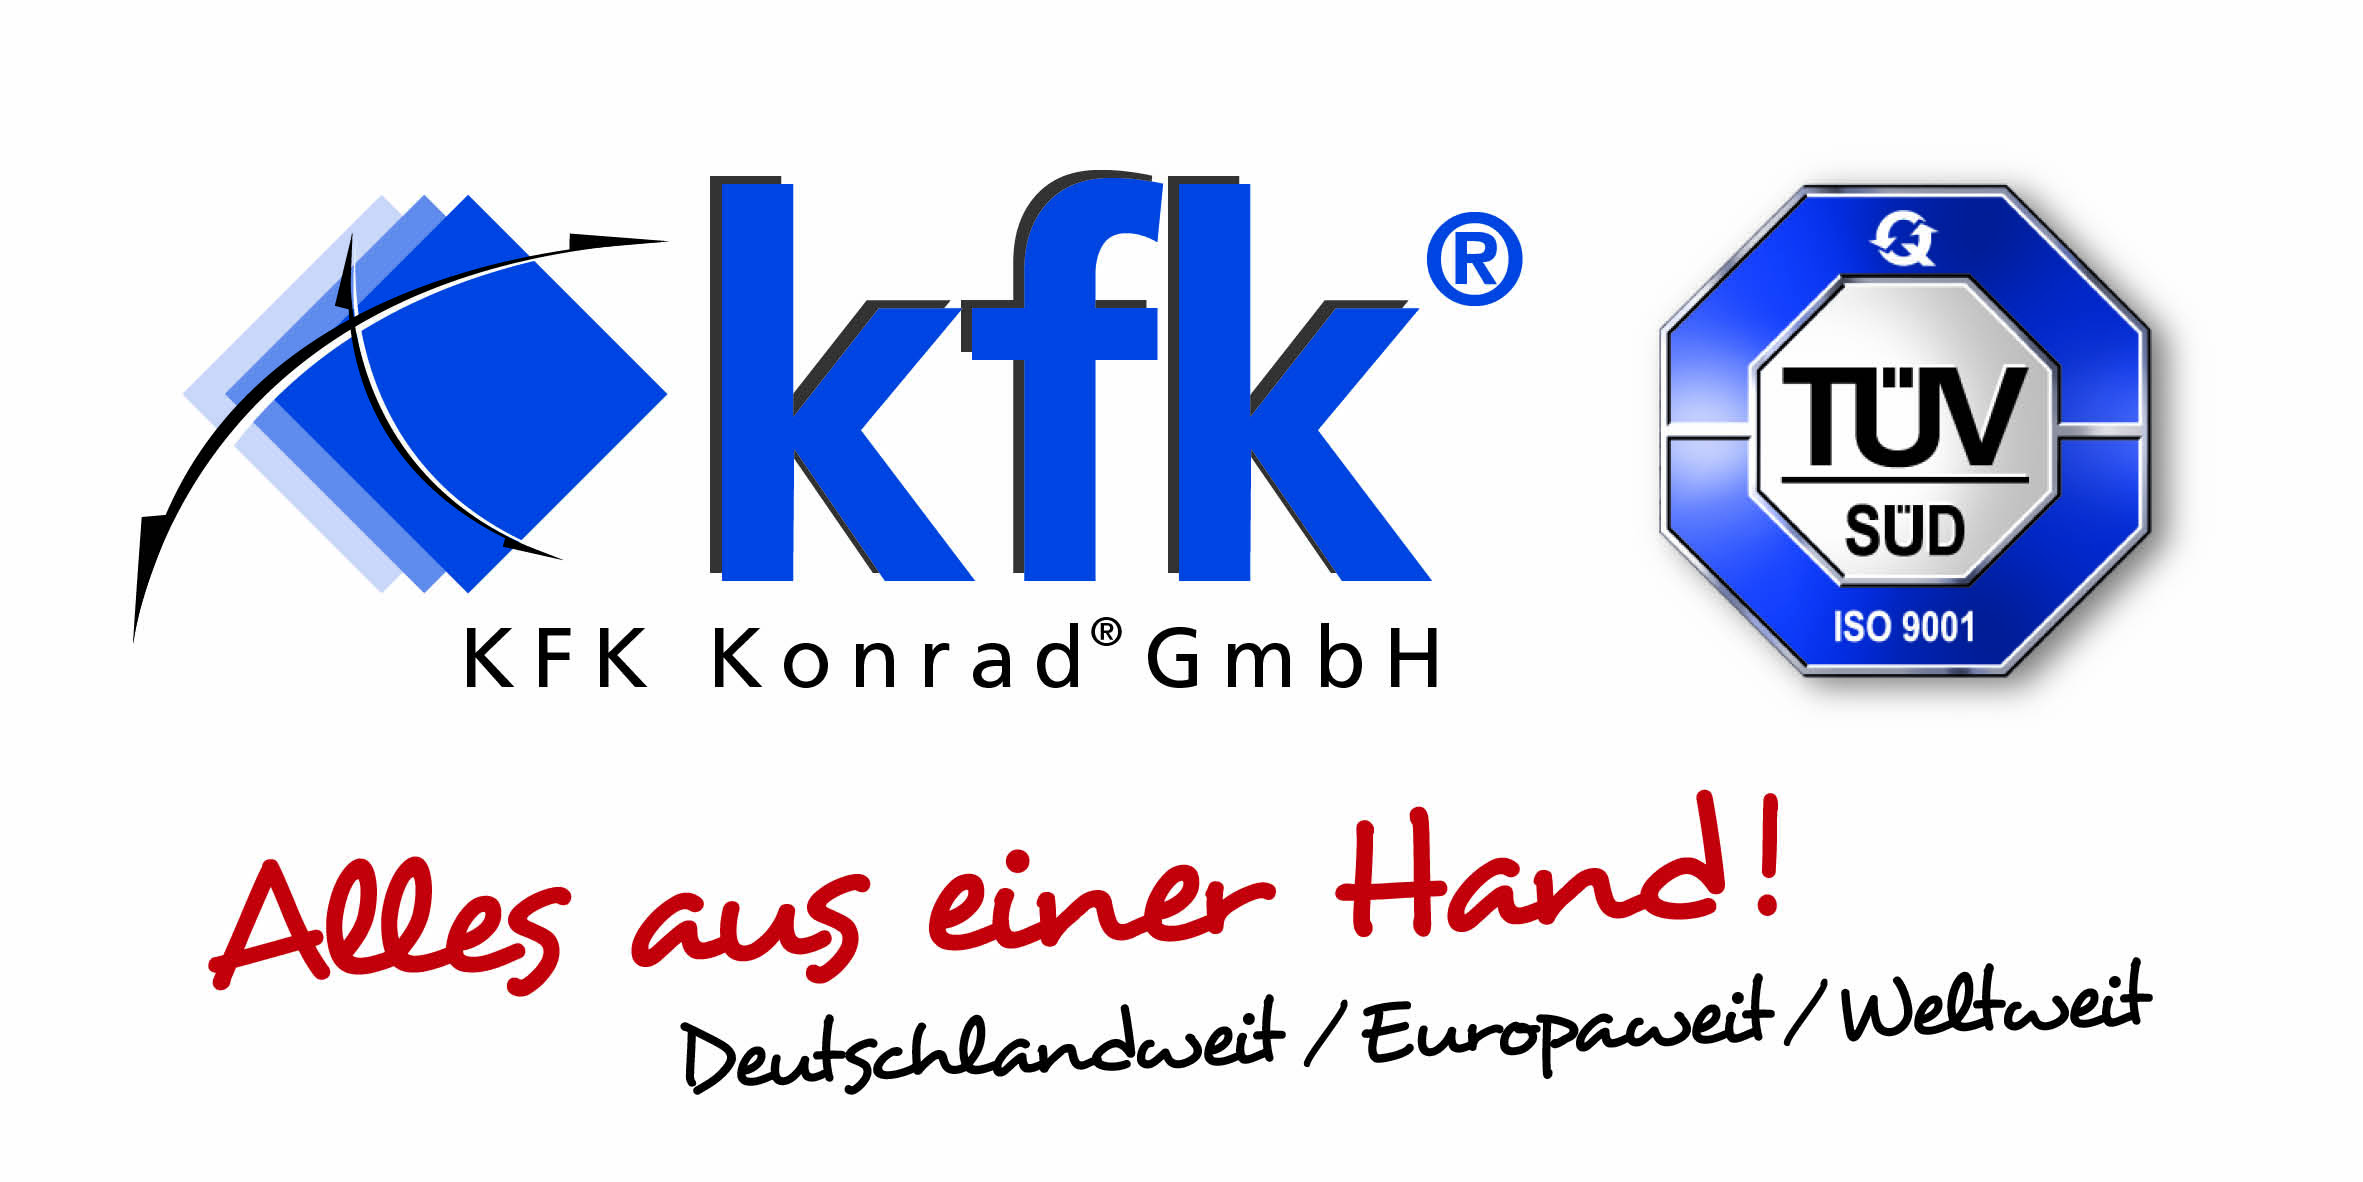 KFK Konrad ® GmbH